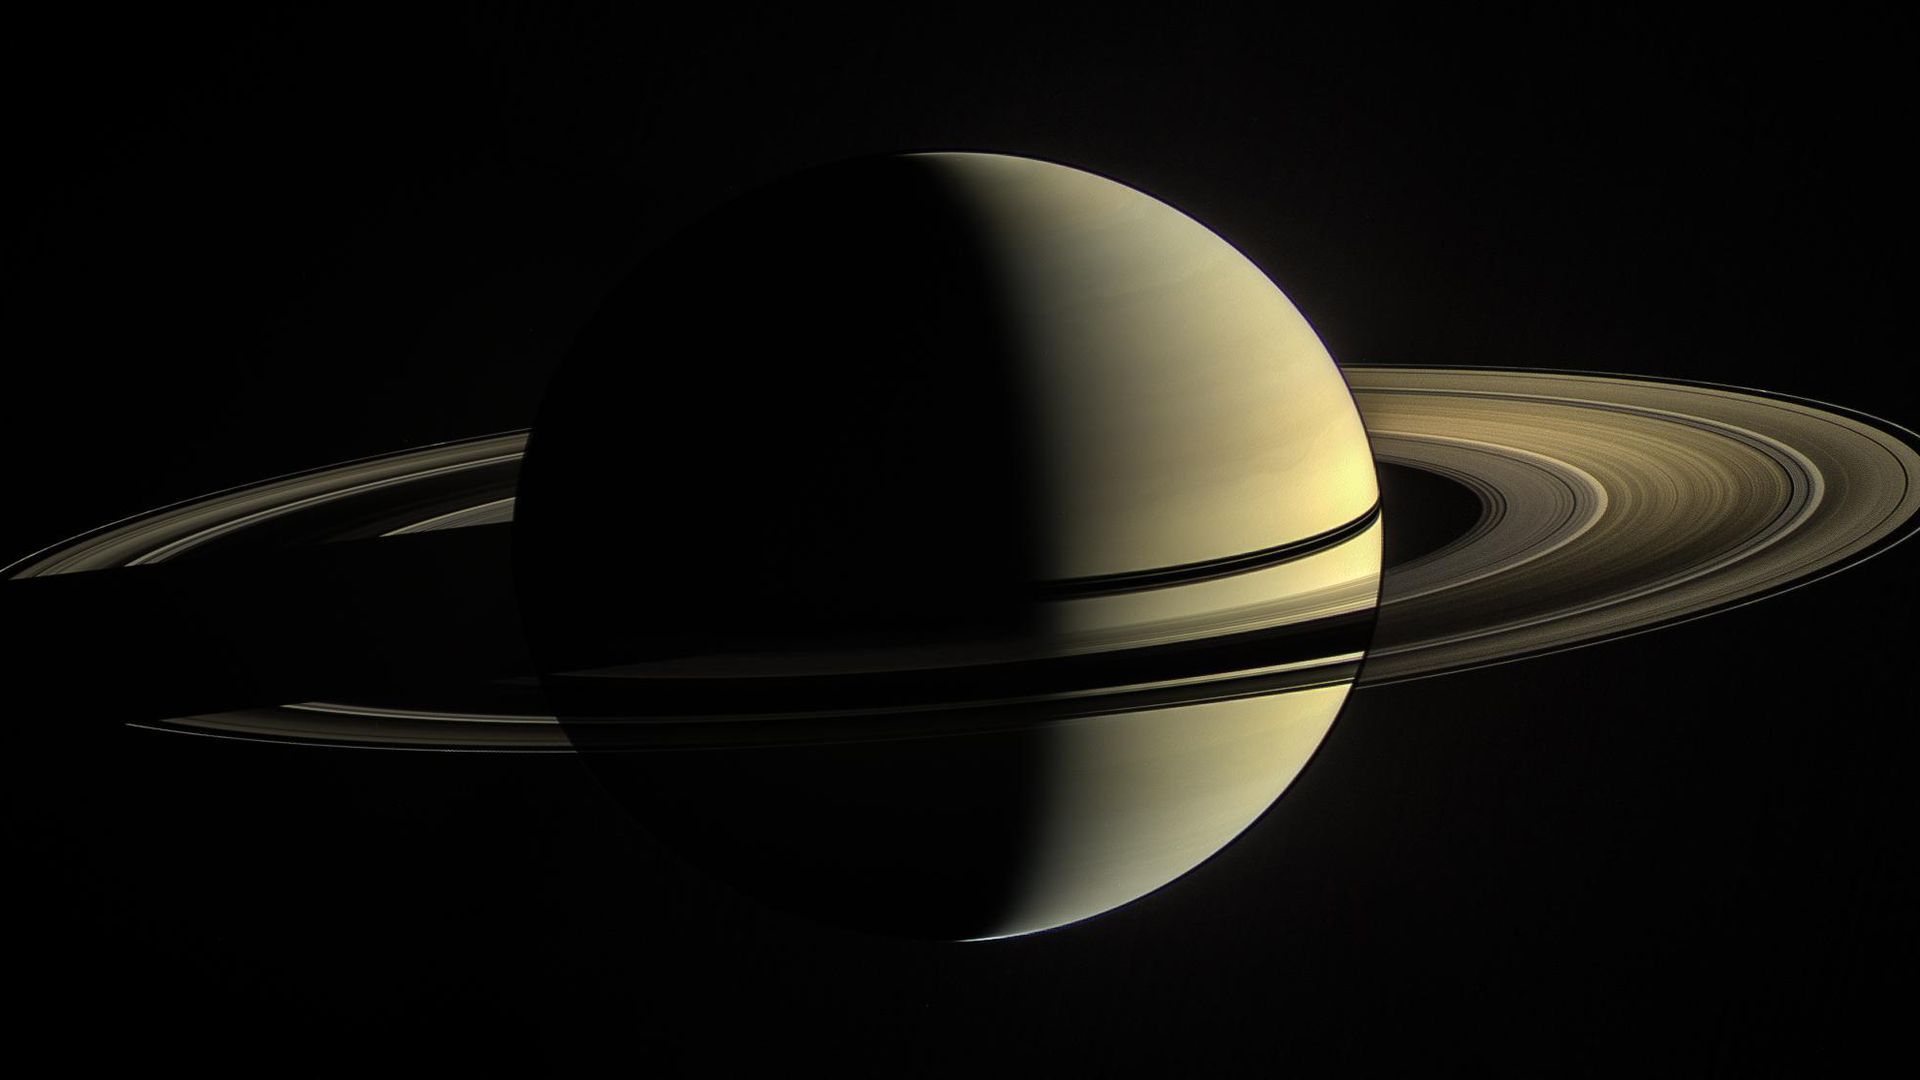 Saturn seen in 2010.